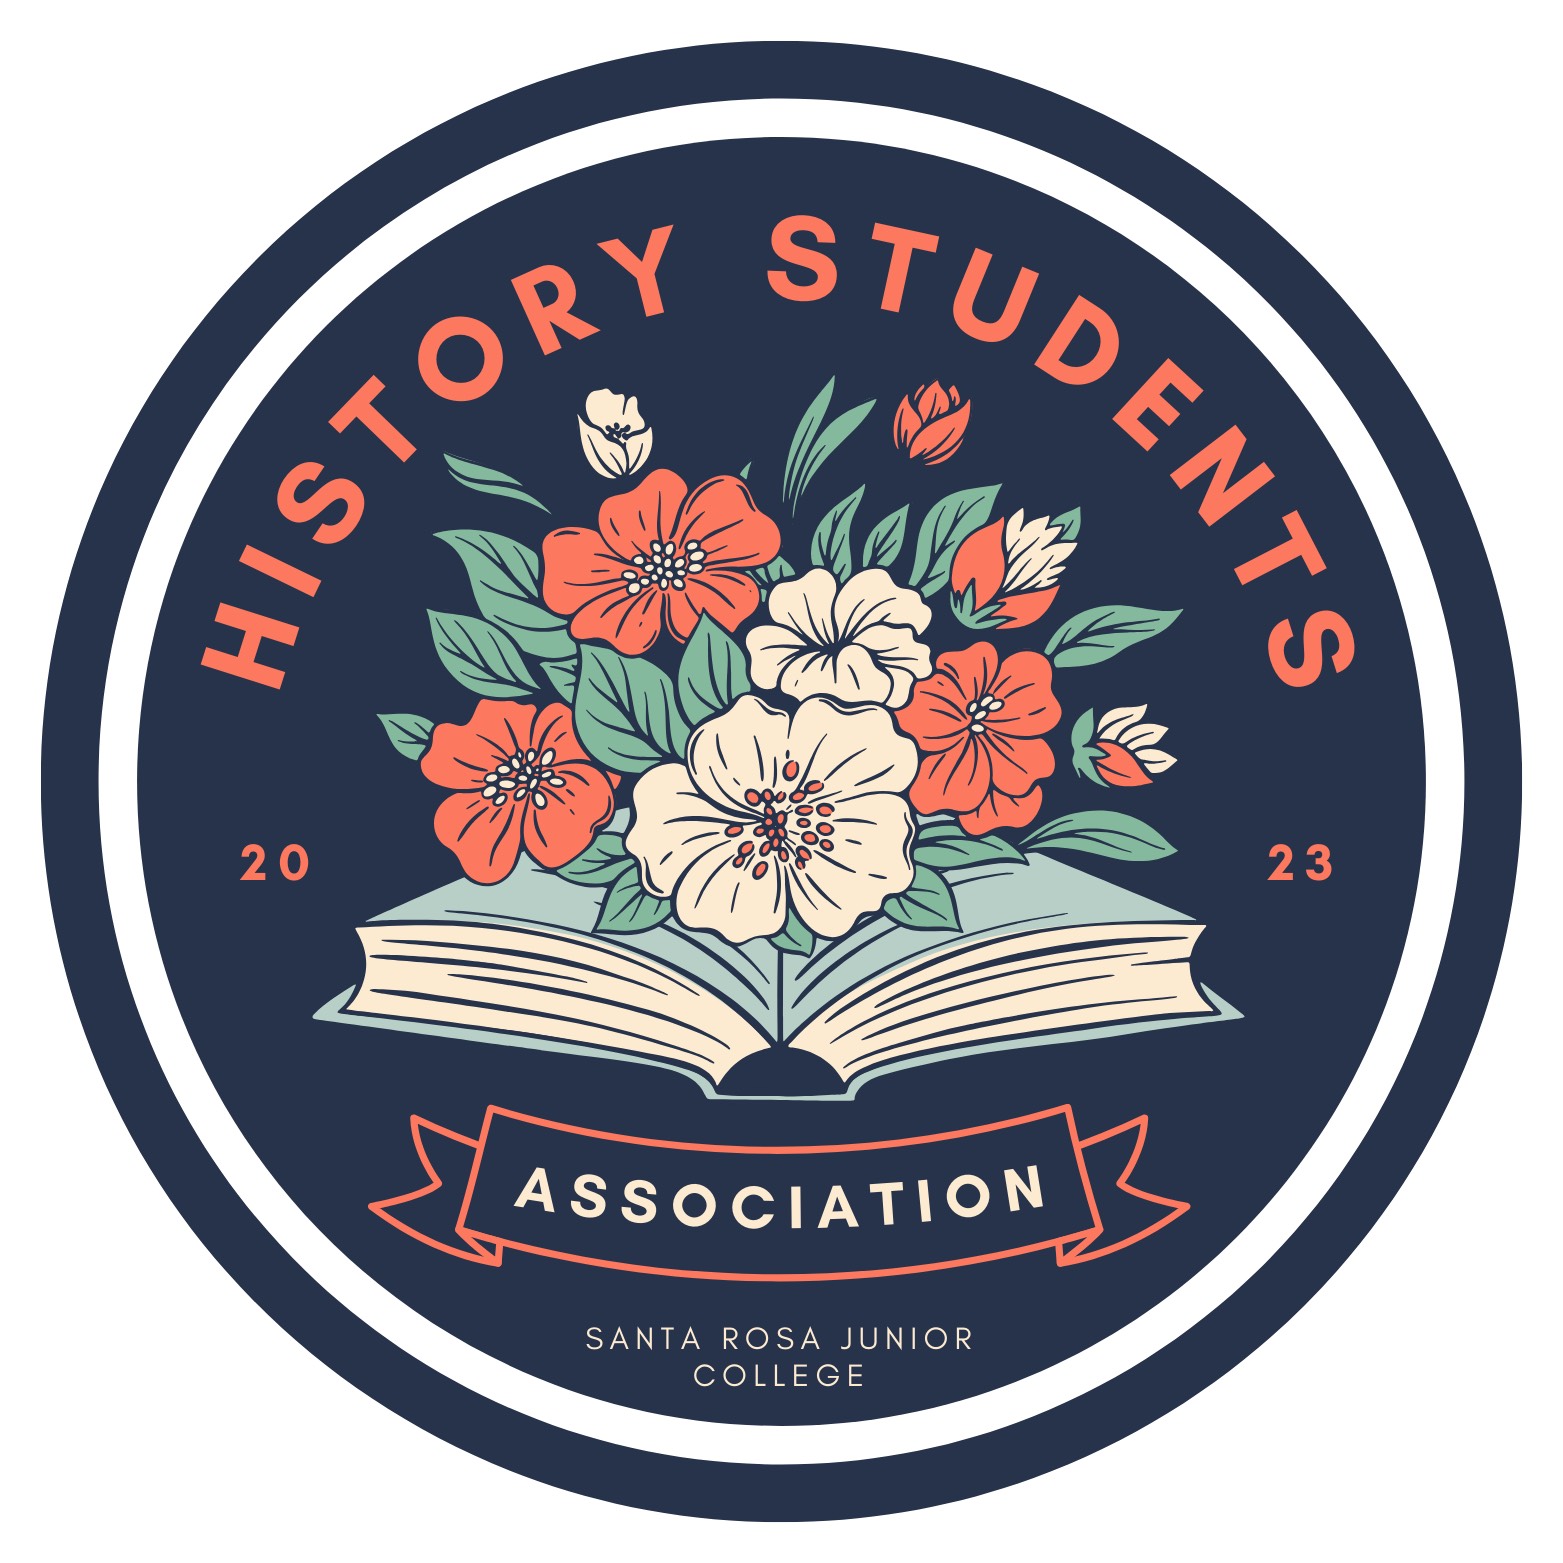 CLUB LOGO History Students Association